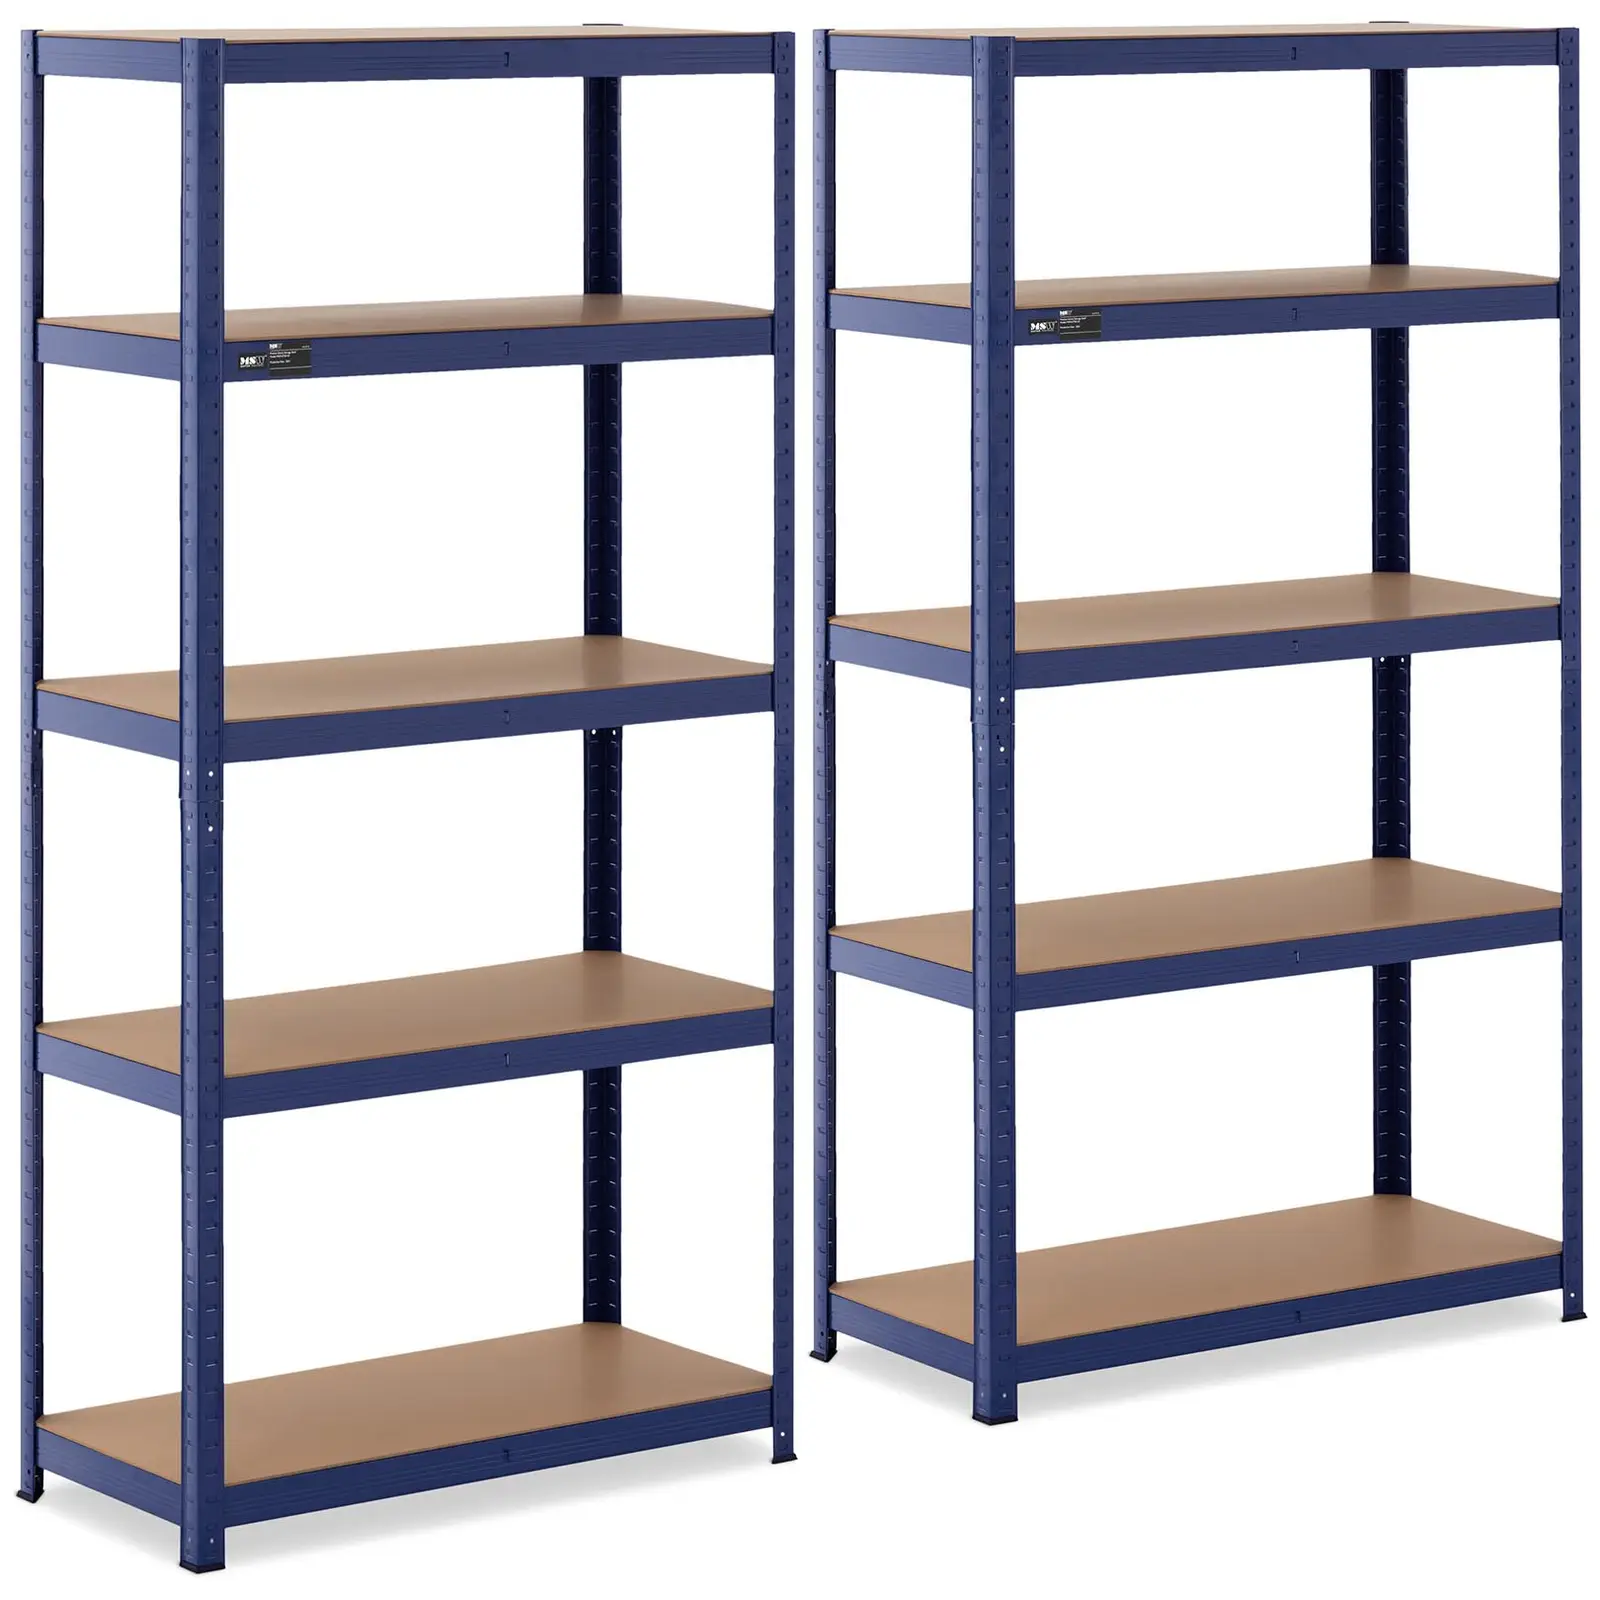 Metal storage rack - 90 x 40 x 180 cm - for 5 x 175 kg - Blue - 2 pcs.